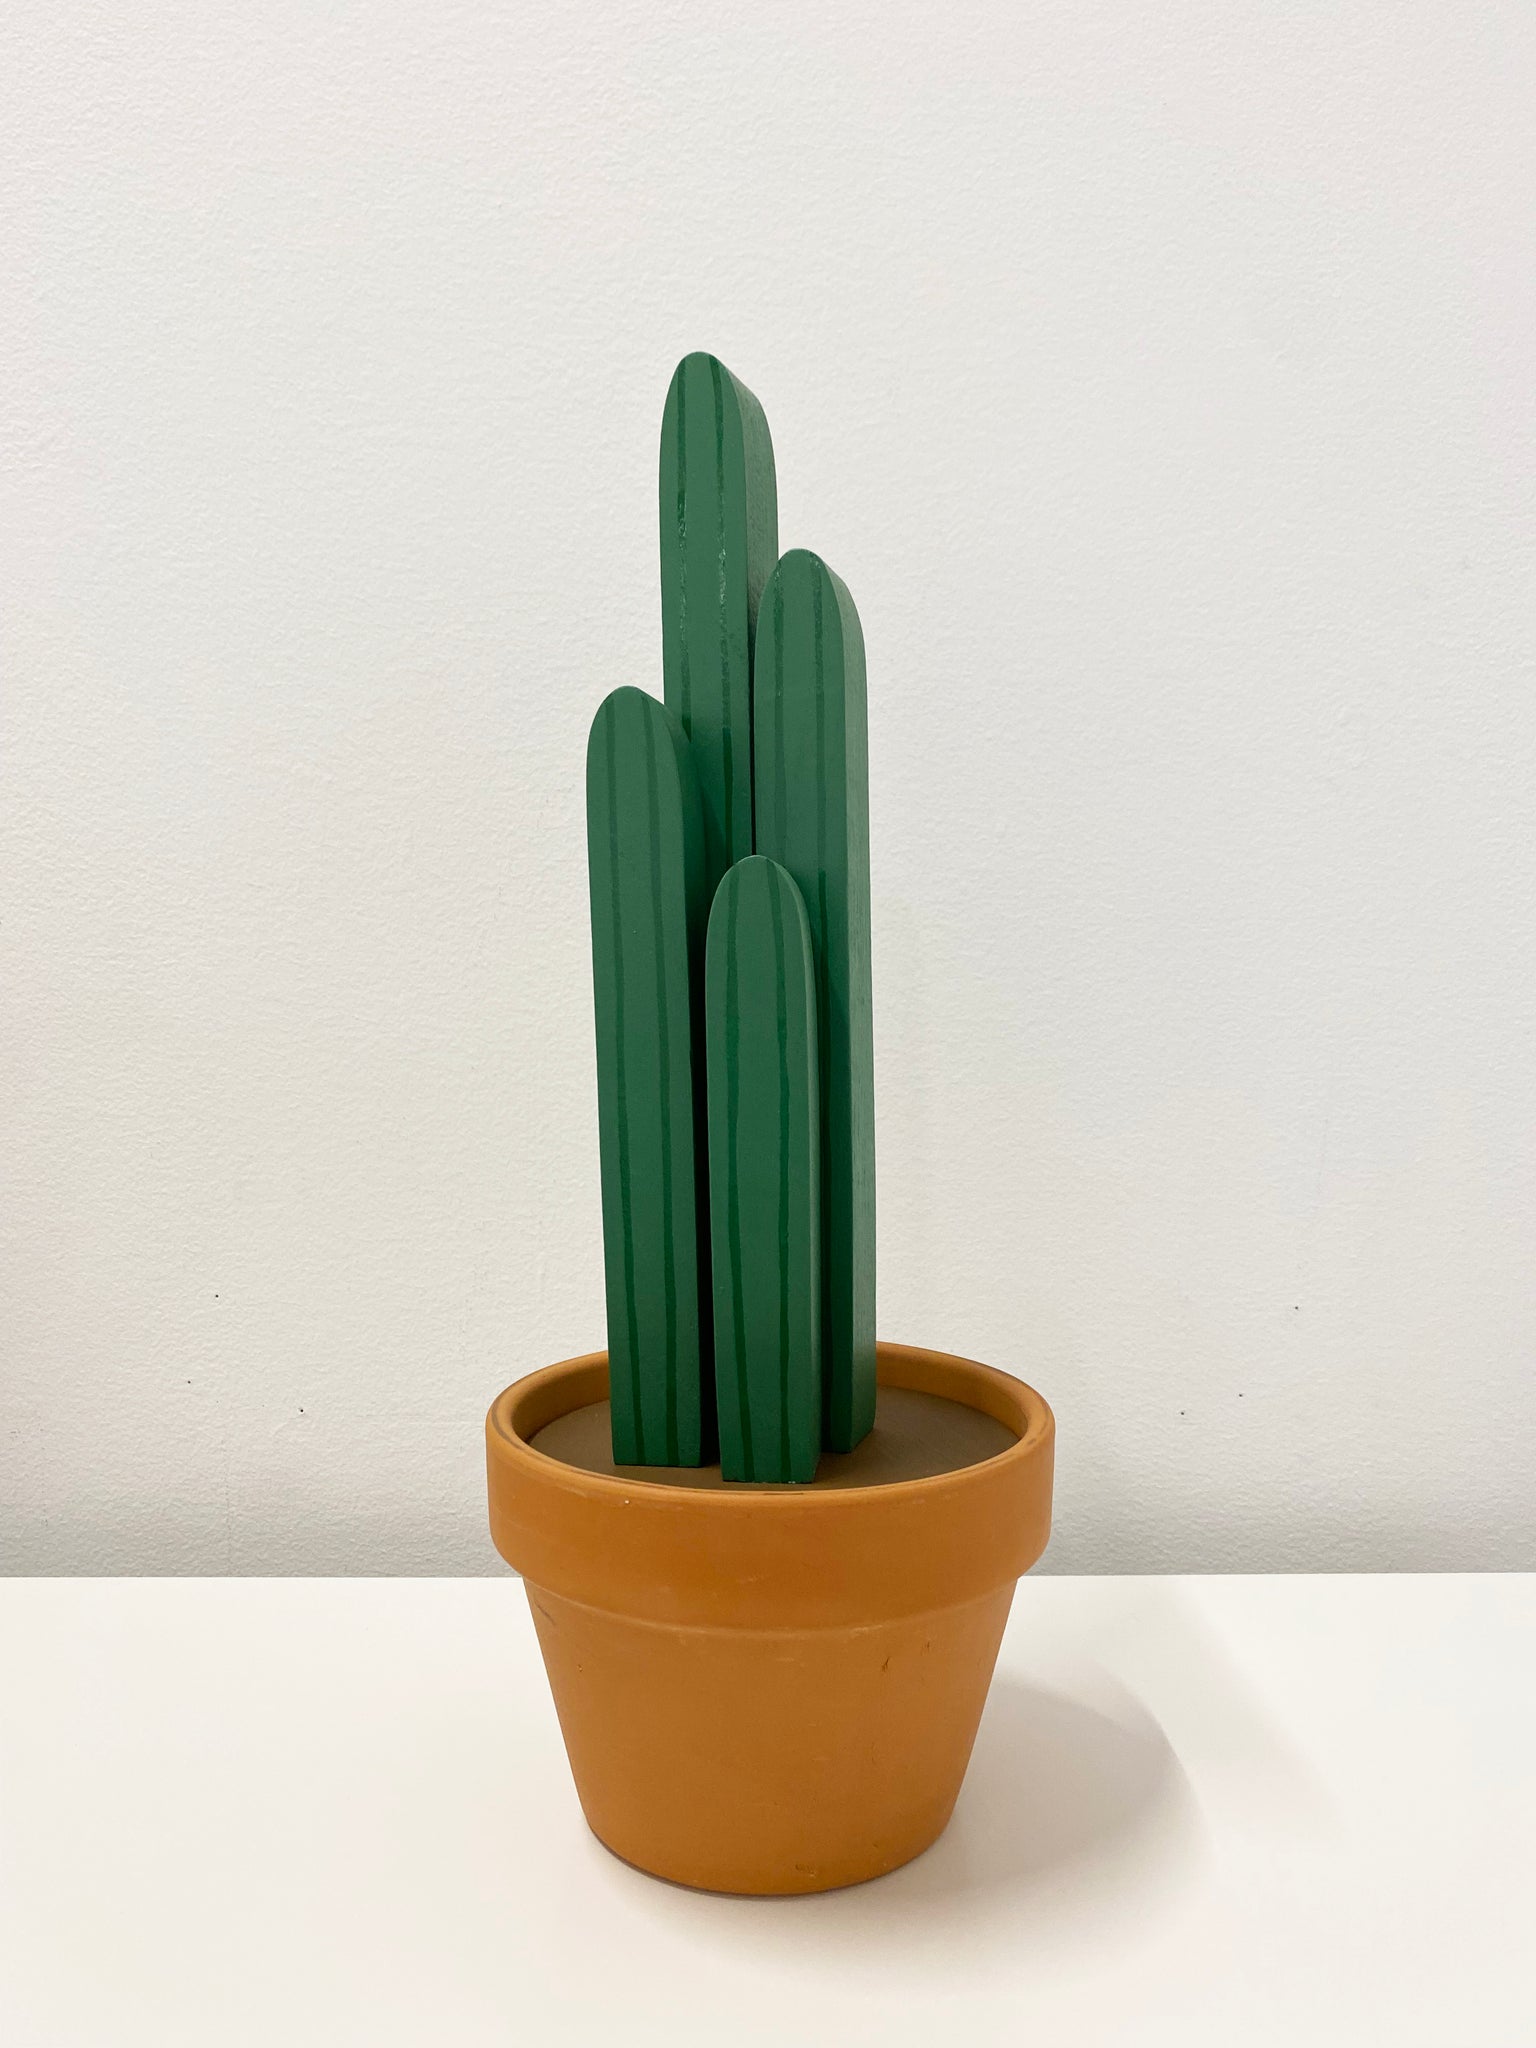 Wooden sculpture of a cactus in a terracotta pot